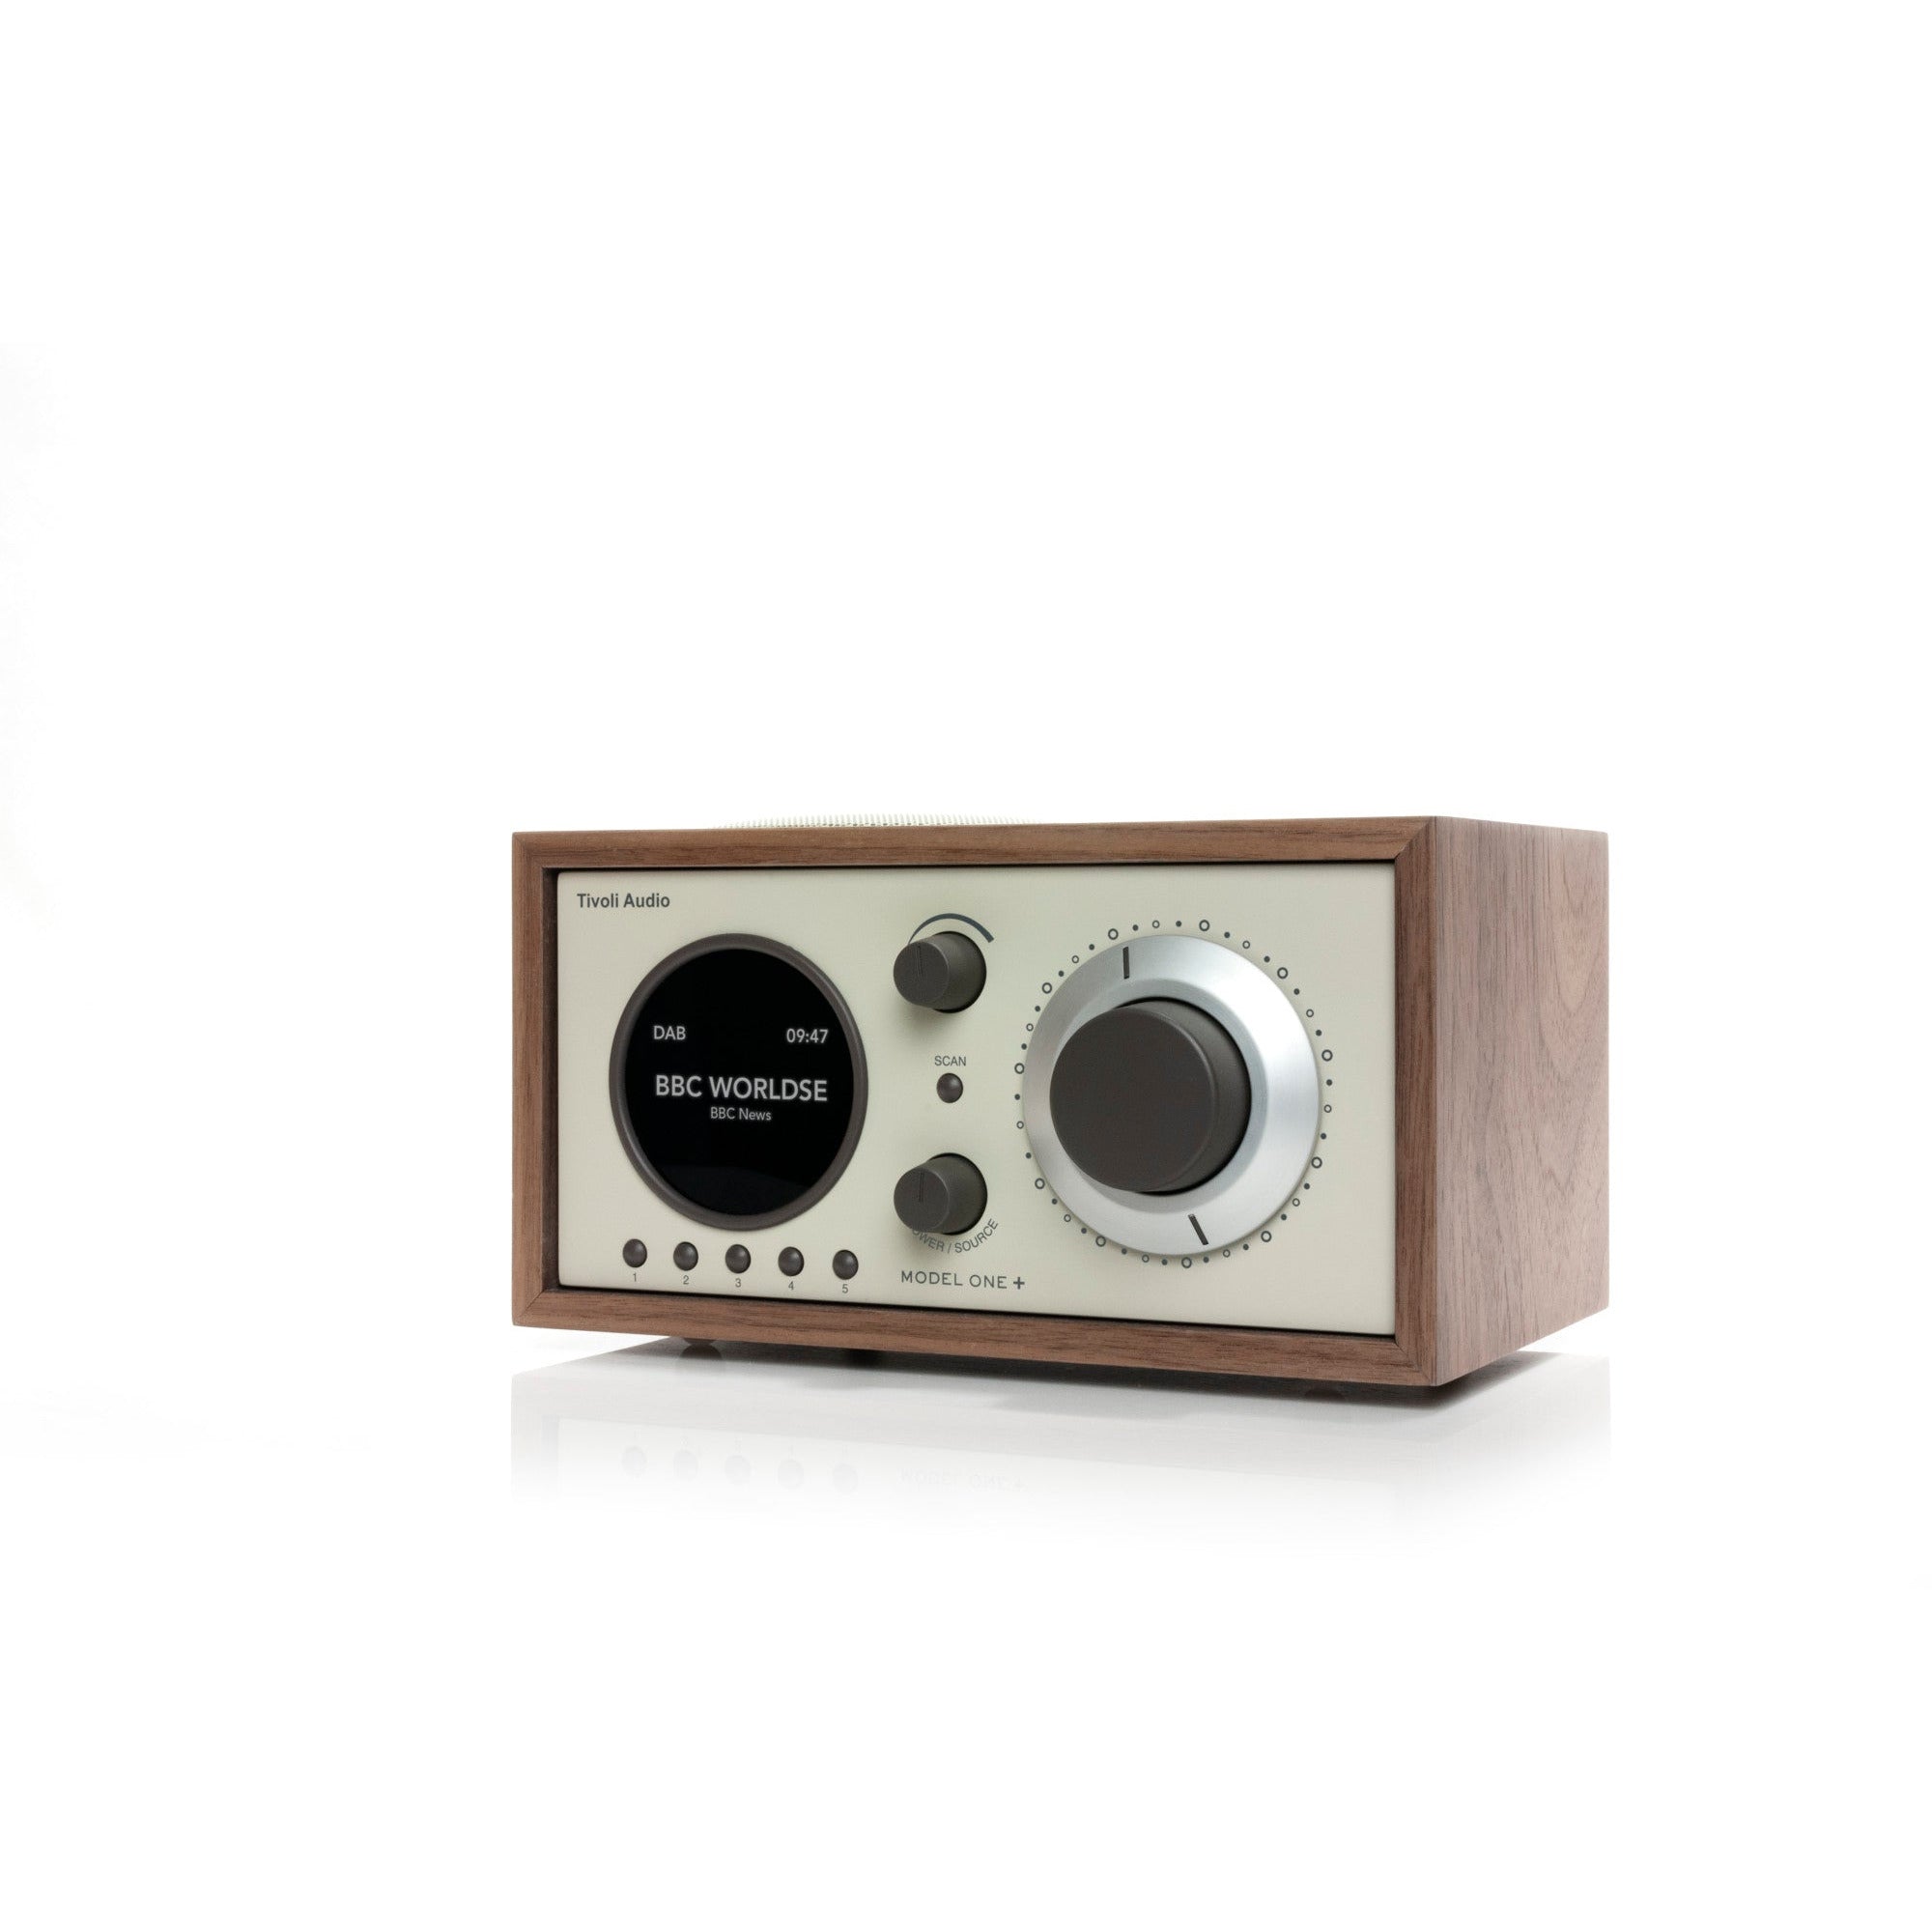 Tivoli Audio MODEL ONE+ Bluetooth DAB+/FM Clock Radio